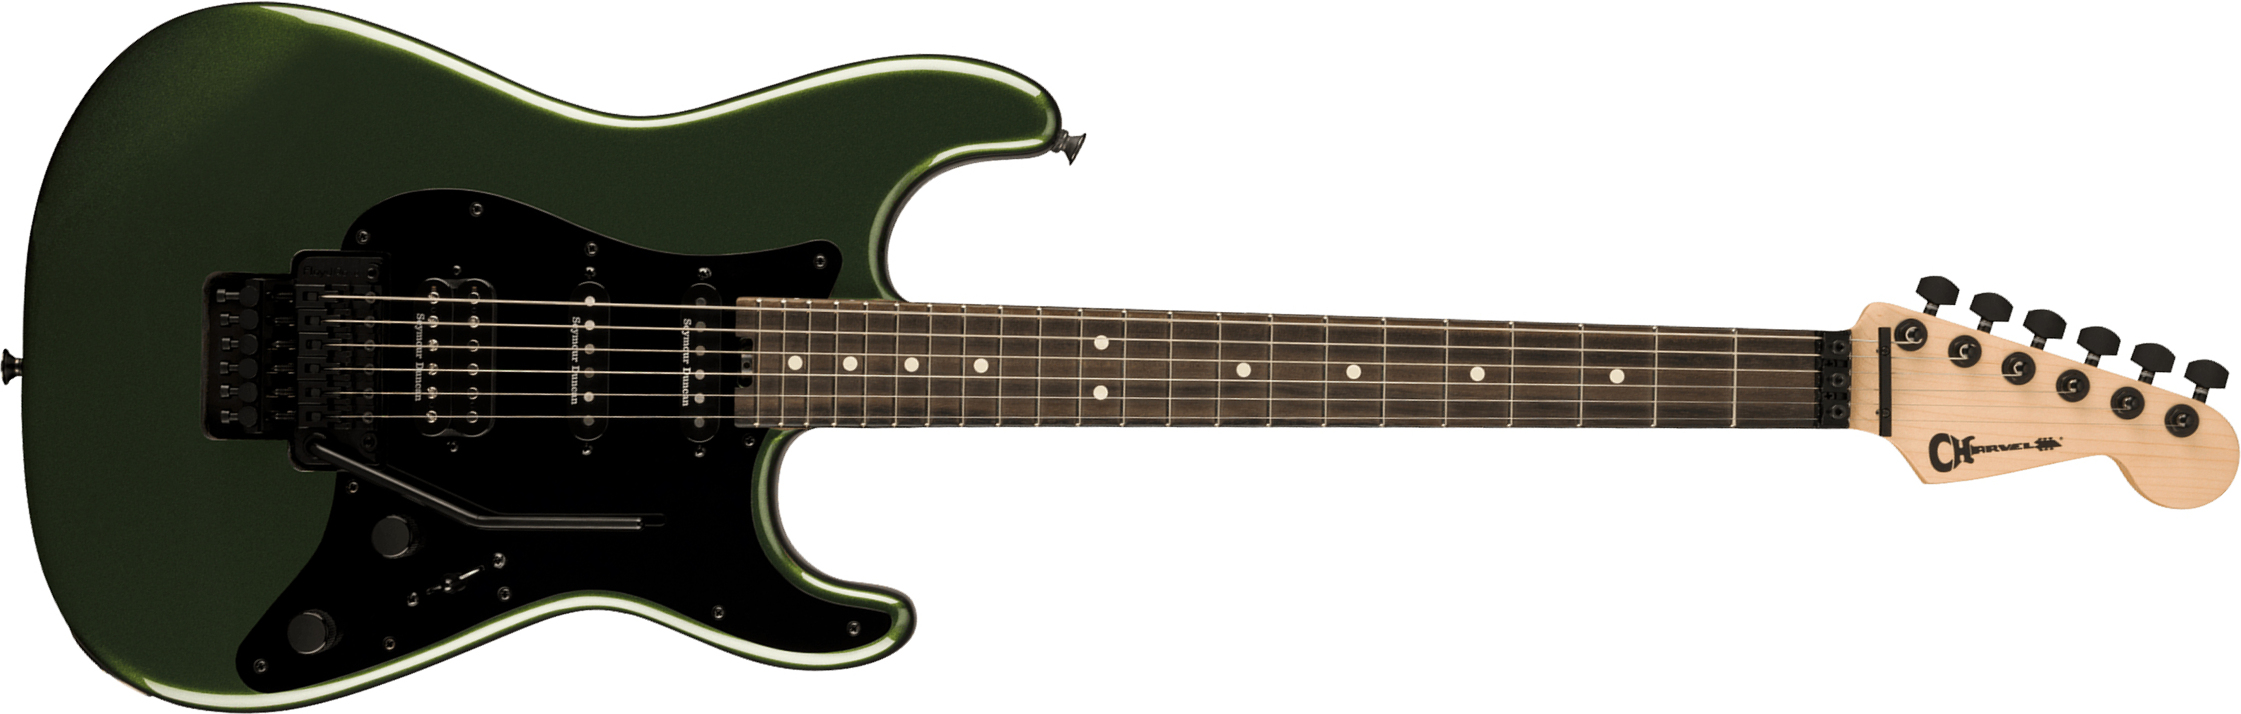 Charvel So-cal Style 1 Hss Fr E Pro-mod Seymour Duncan Eb - Lambo Green - Guitare Électrique Forme Str - Main picture